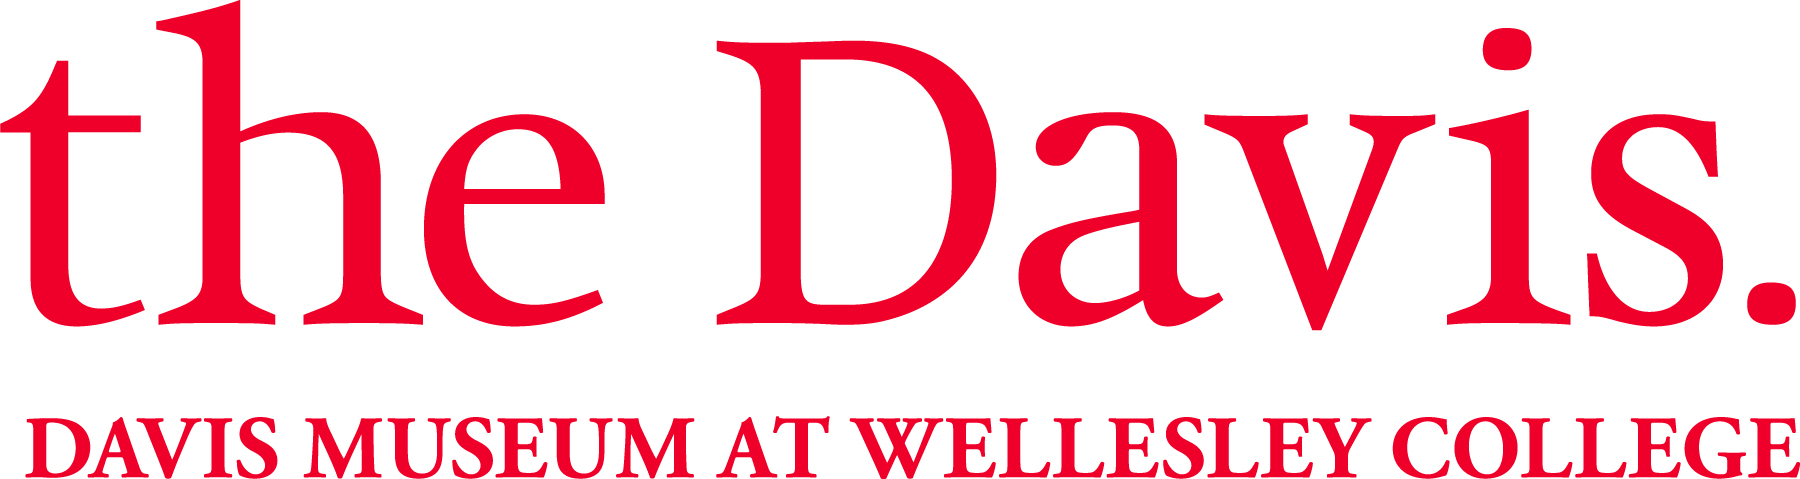 DavisMuseumWellesley_Logo.jpg